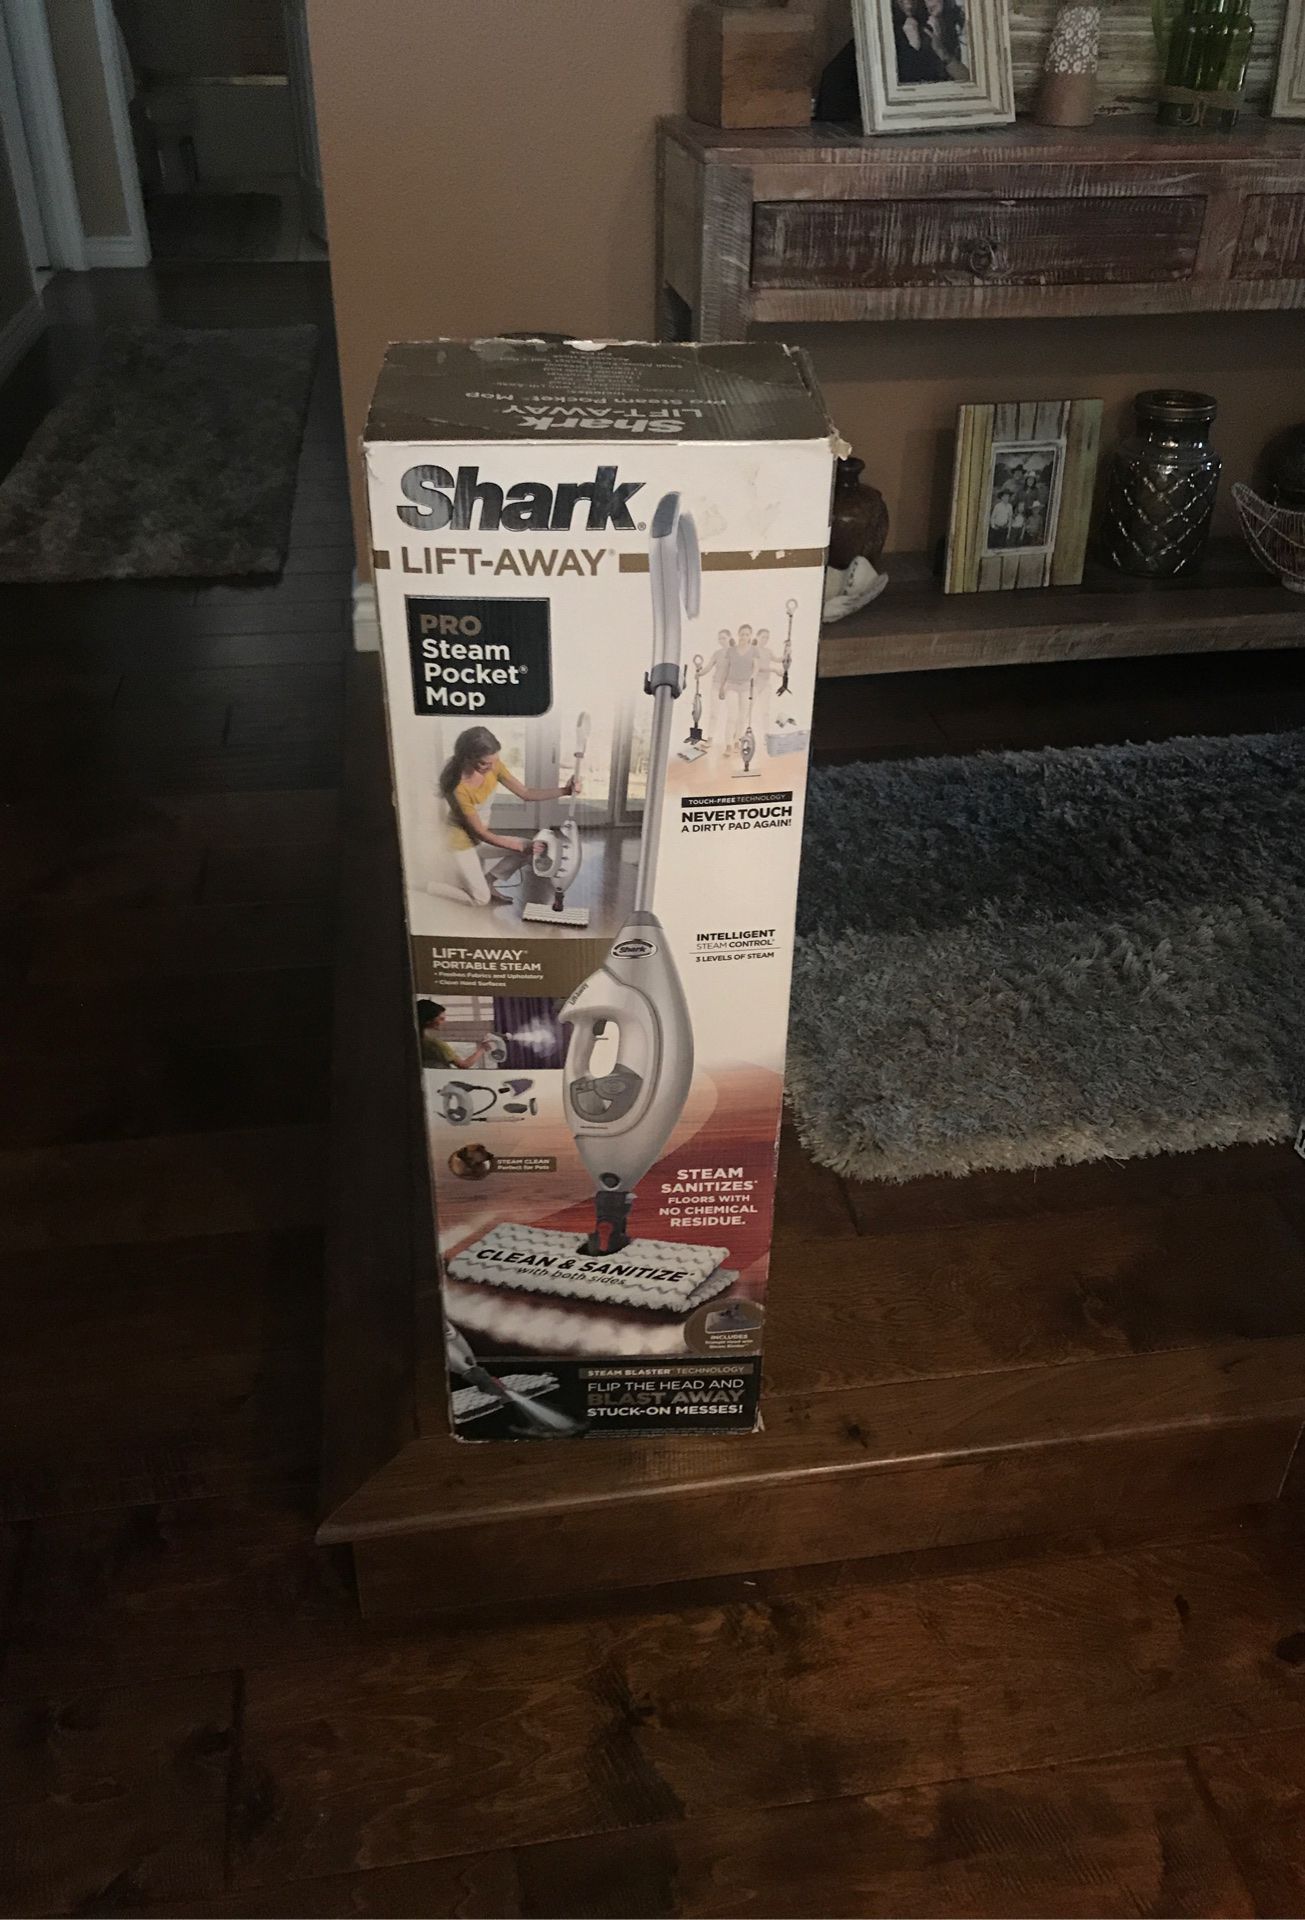 Shark That’s the way I steam pocket mop